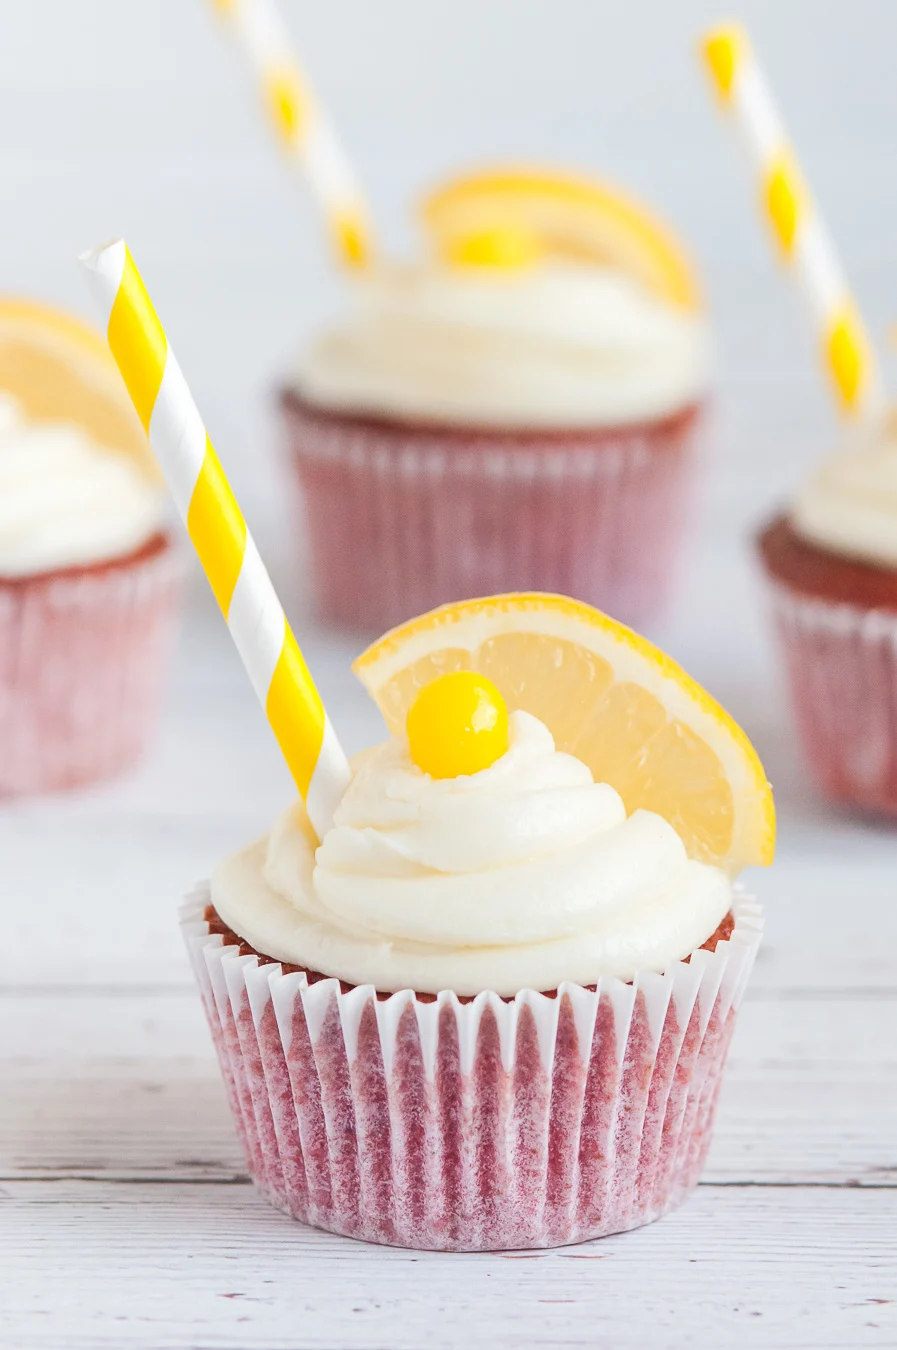 strawberry lemonade cupcakes with lemon wedge on top